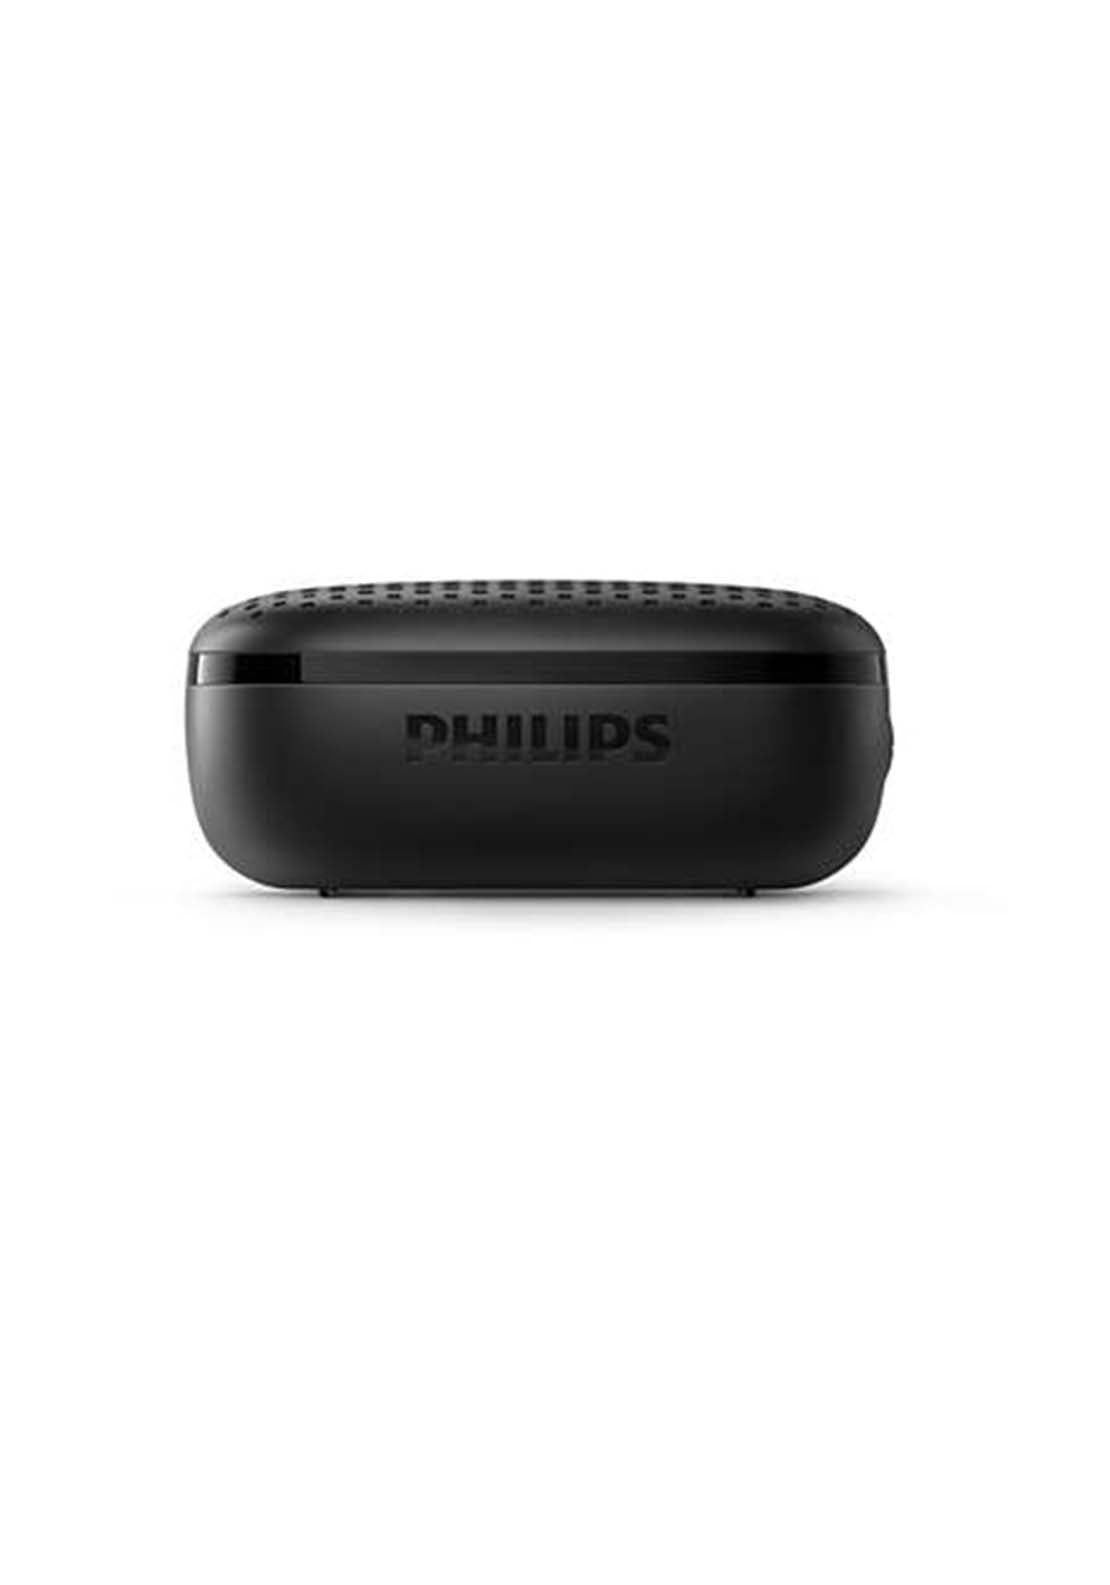 Philips Bluetooth Speaker | Tas2505B00 2 Shaws Department Stores